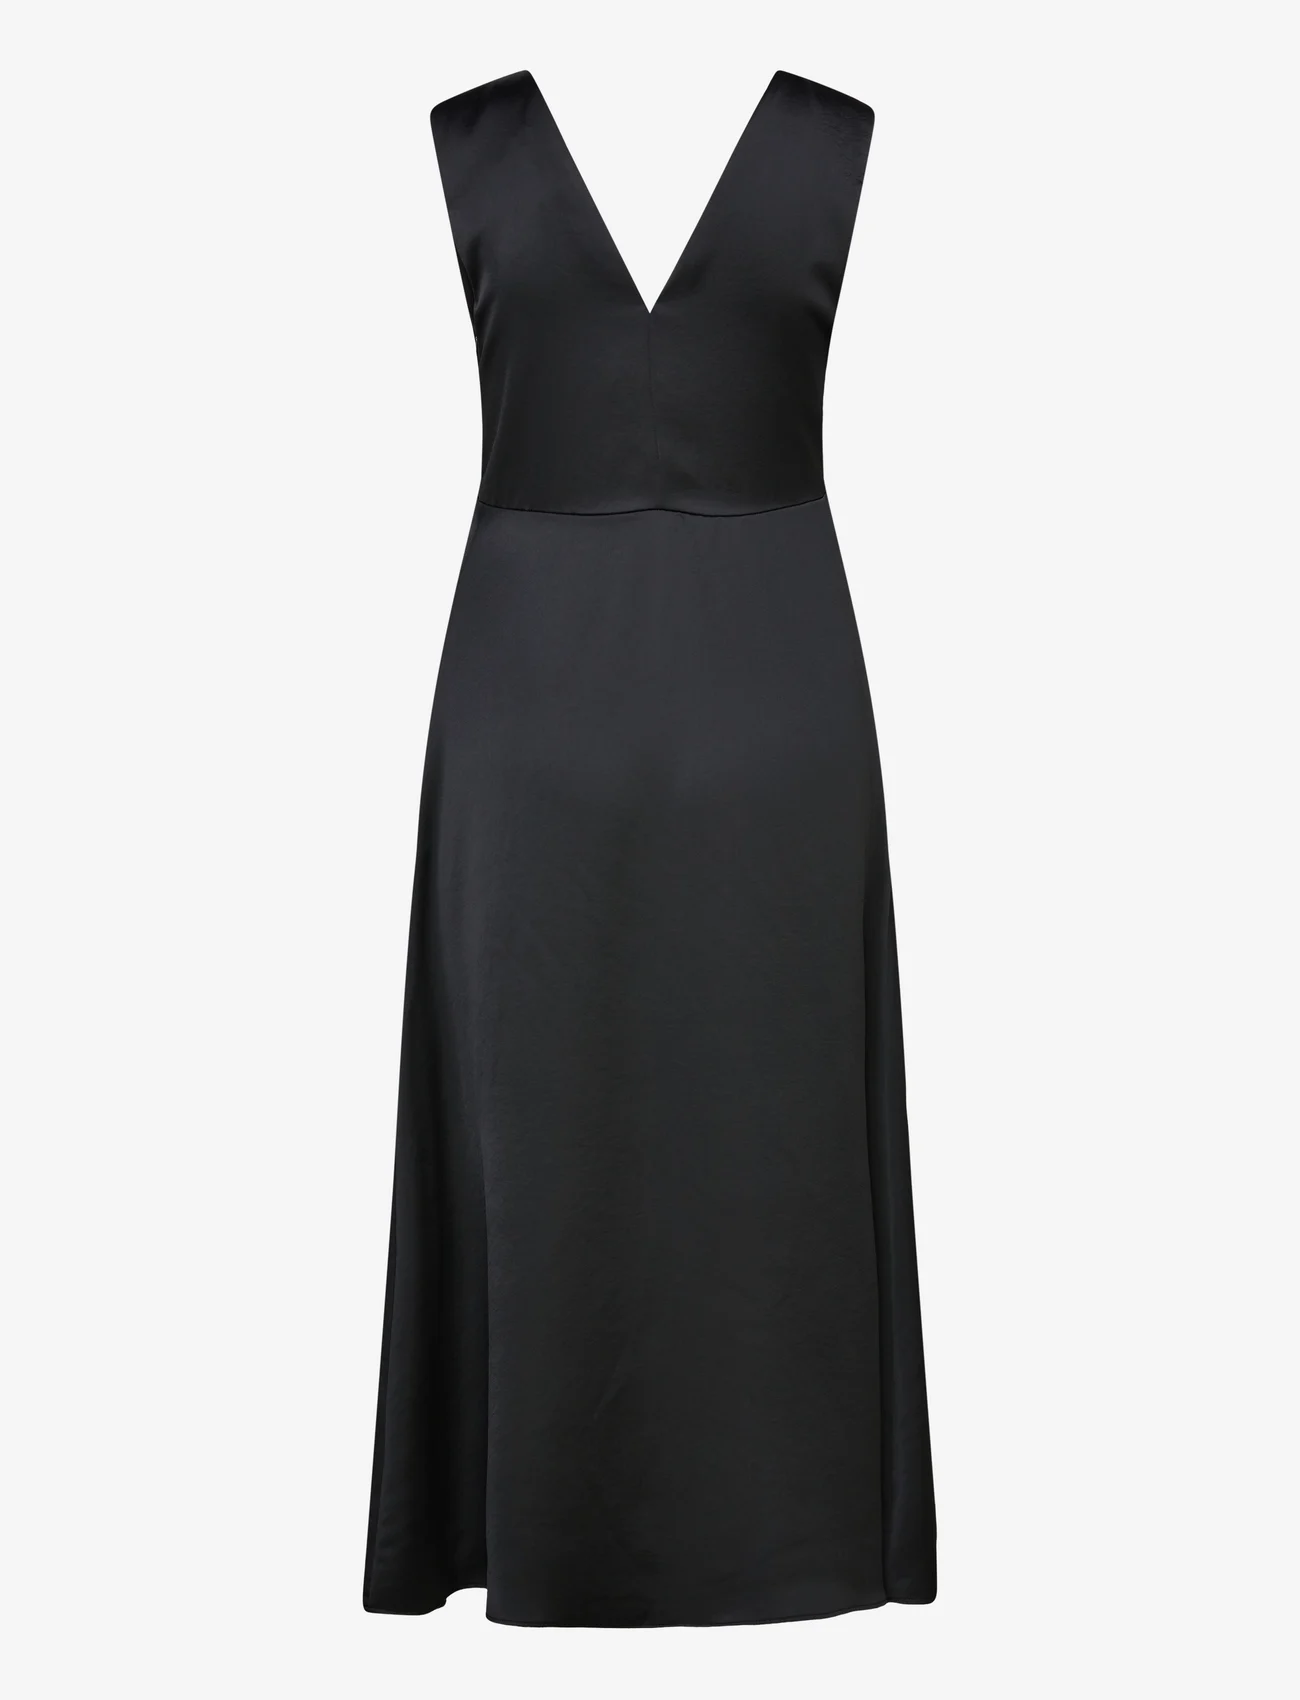 Weekend Max Mara - EDOLO - summer dresses - black - 1